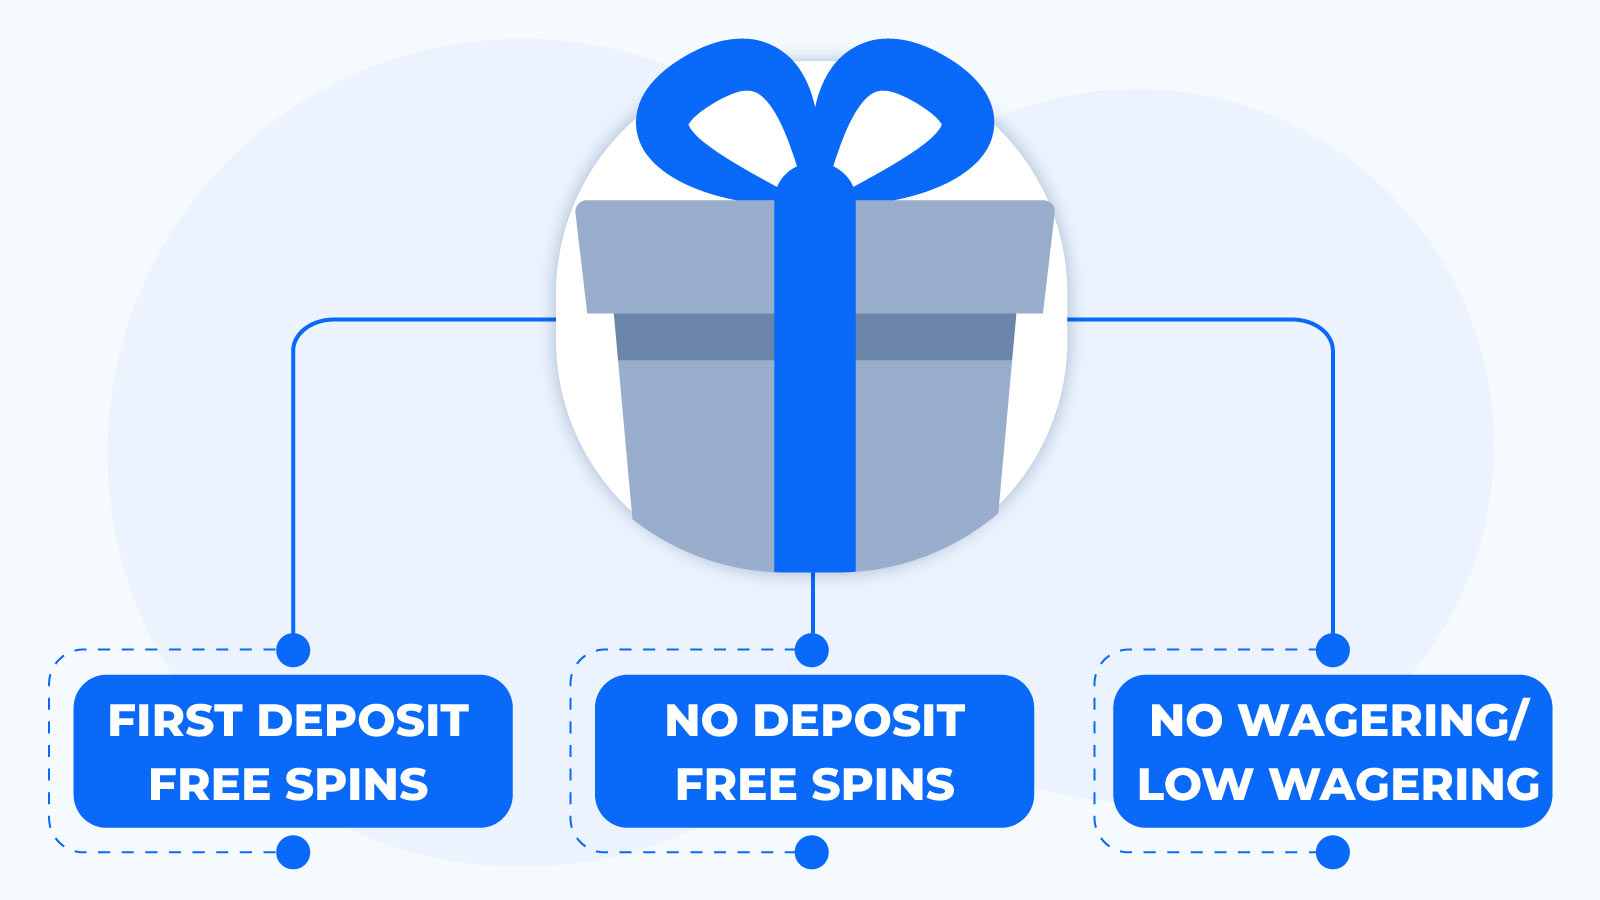 Types of Bonuses From Starburst Slot Free Spins to No Deposit Bonuses